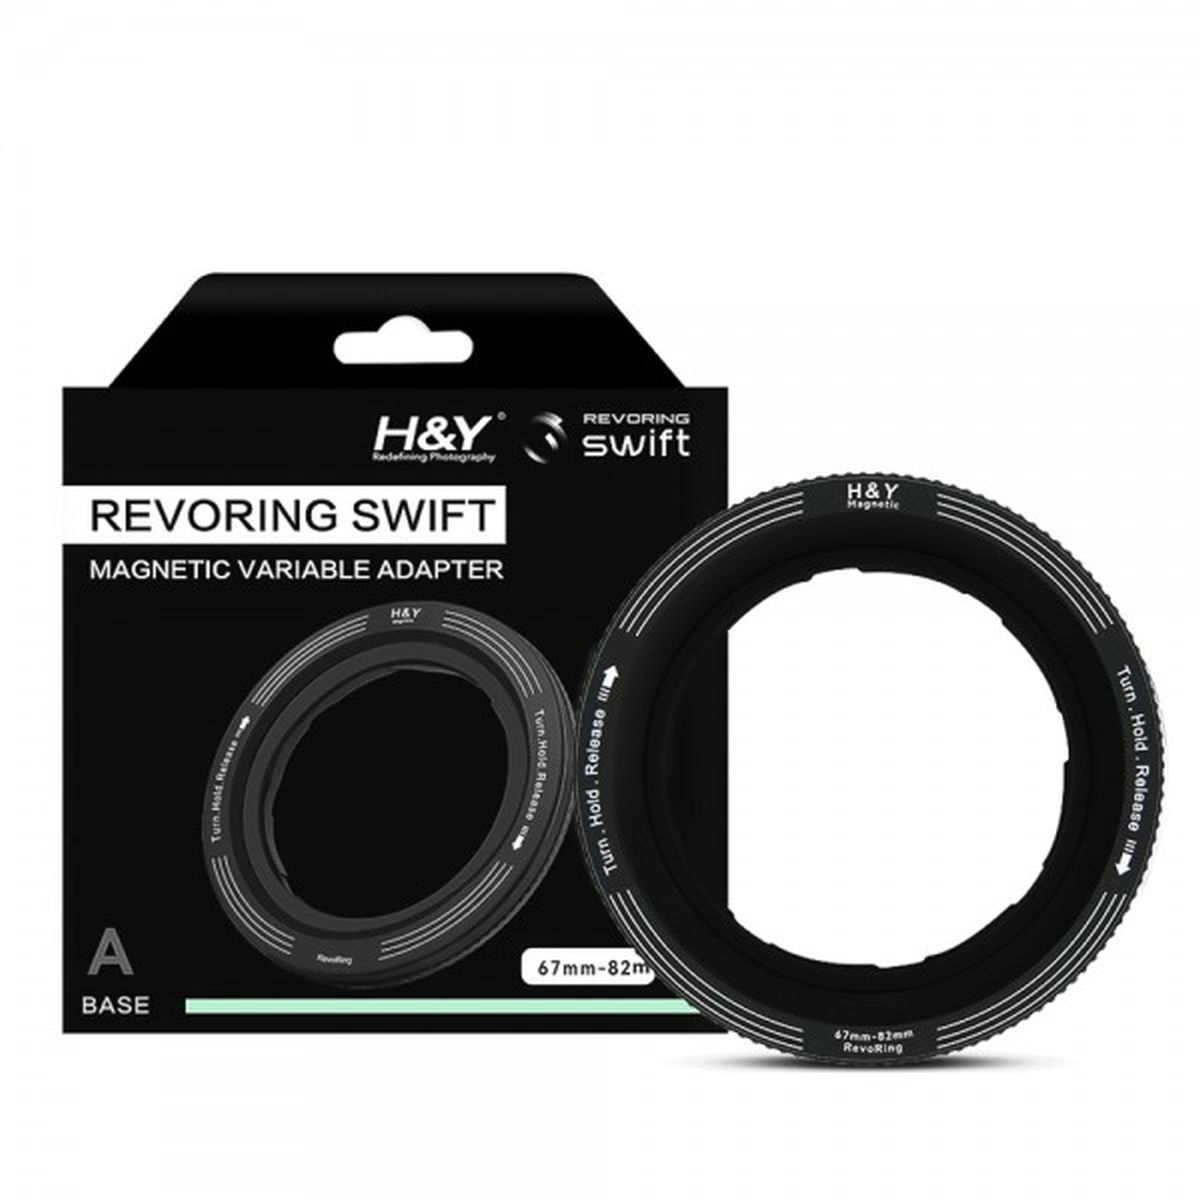 H&Y Swift A Revoring 67-82 mm Adapter magnetisch